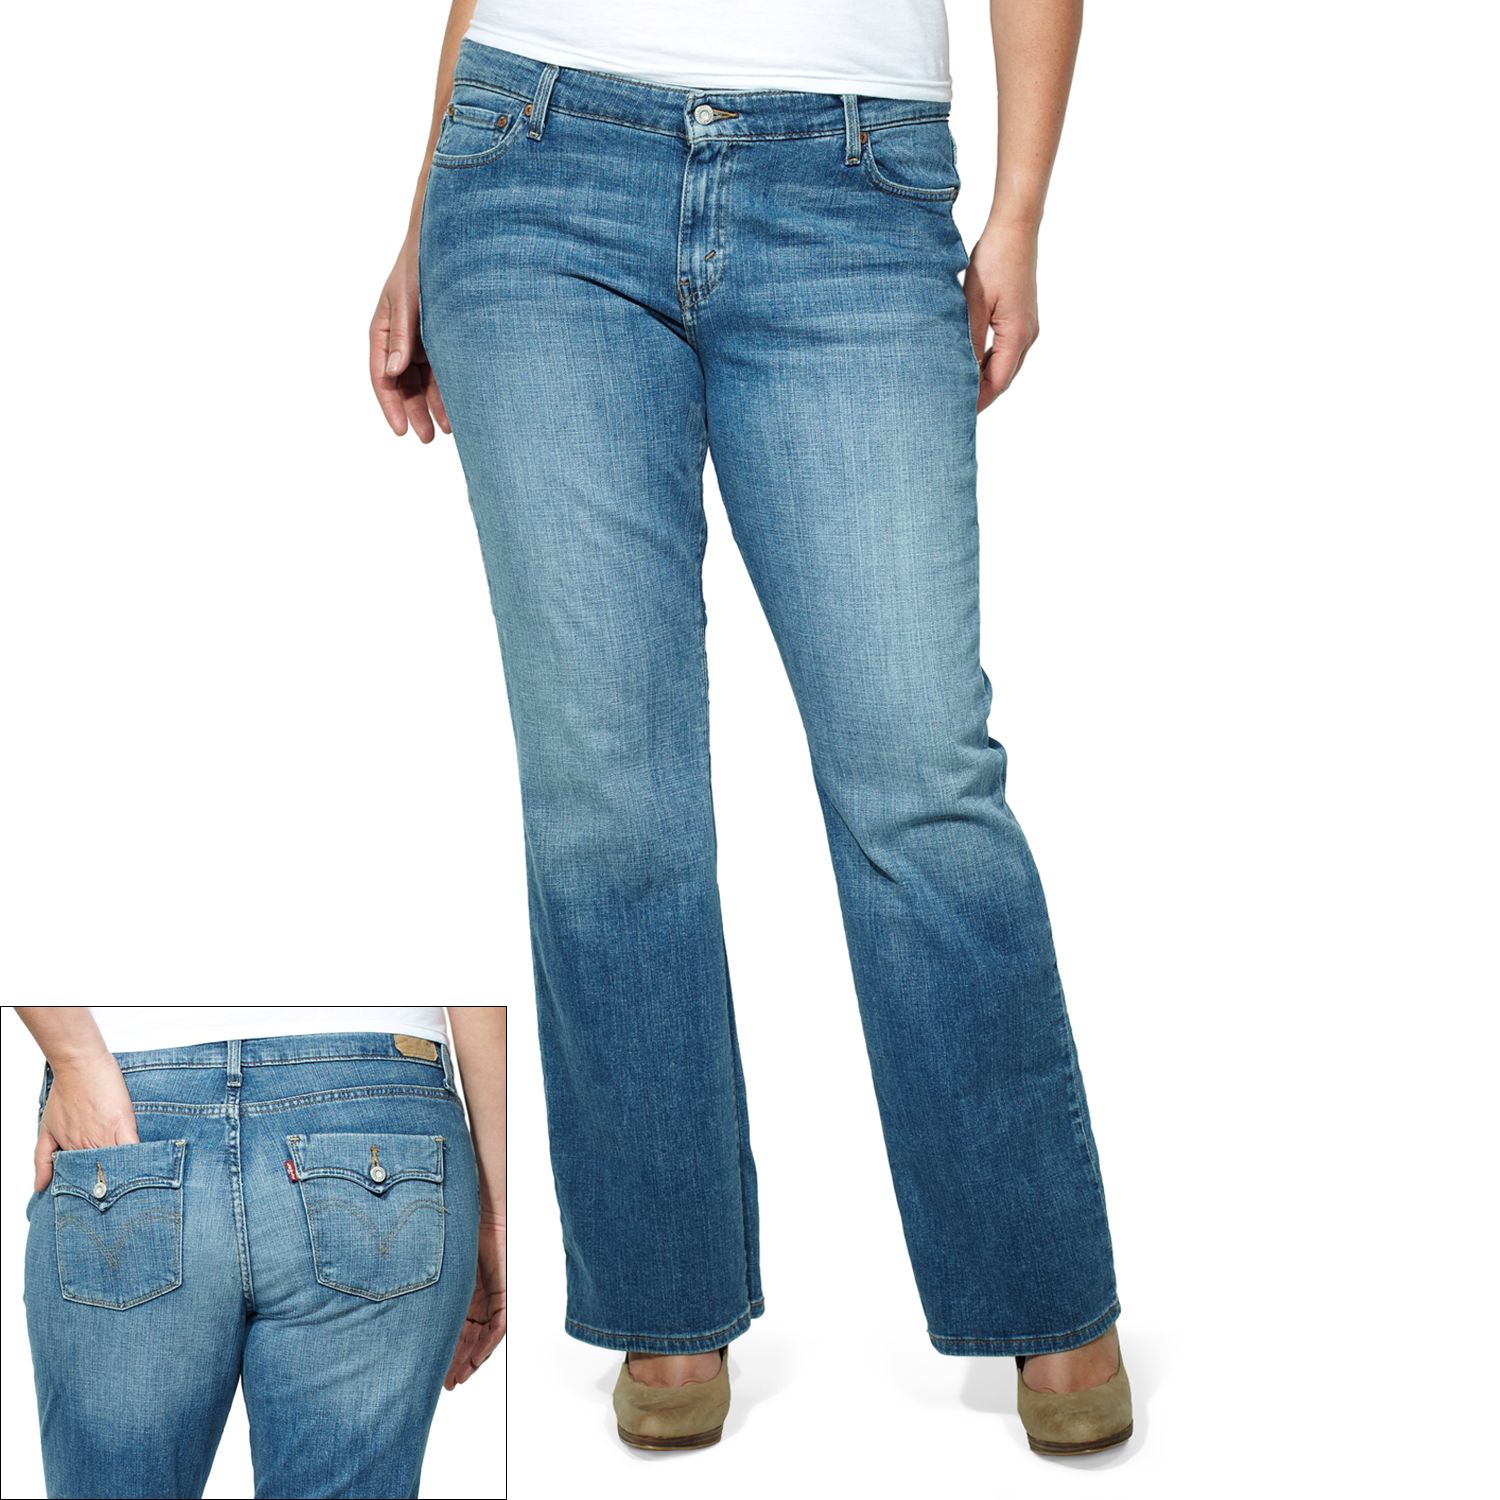 levi's plus size stretch jeans